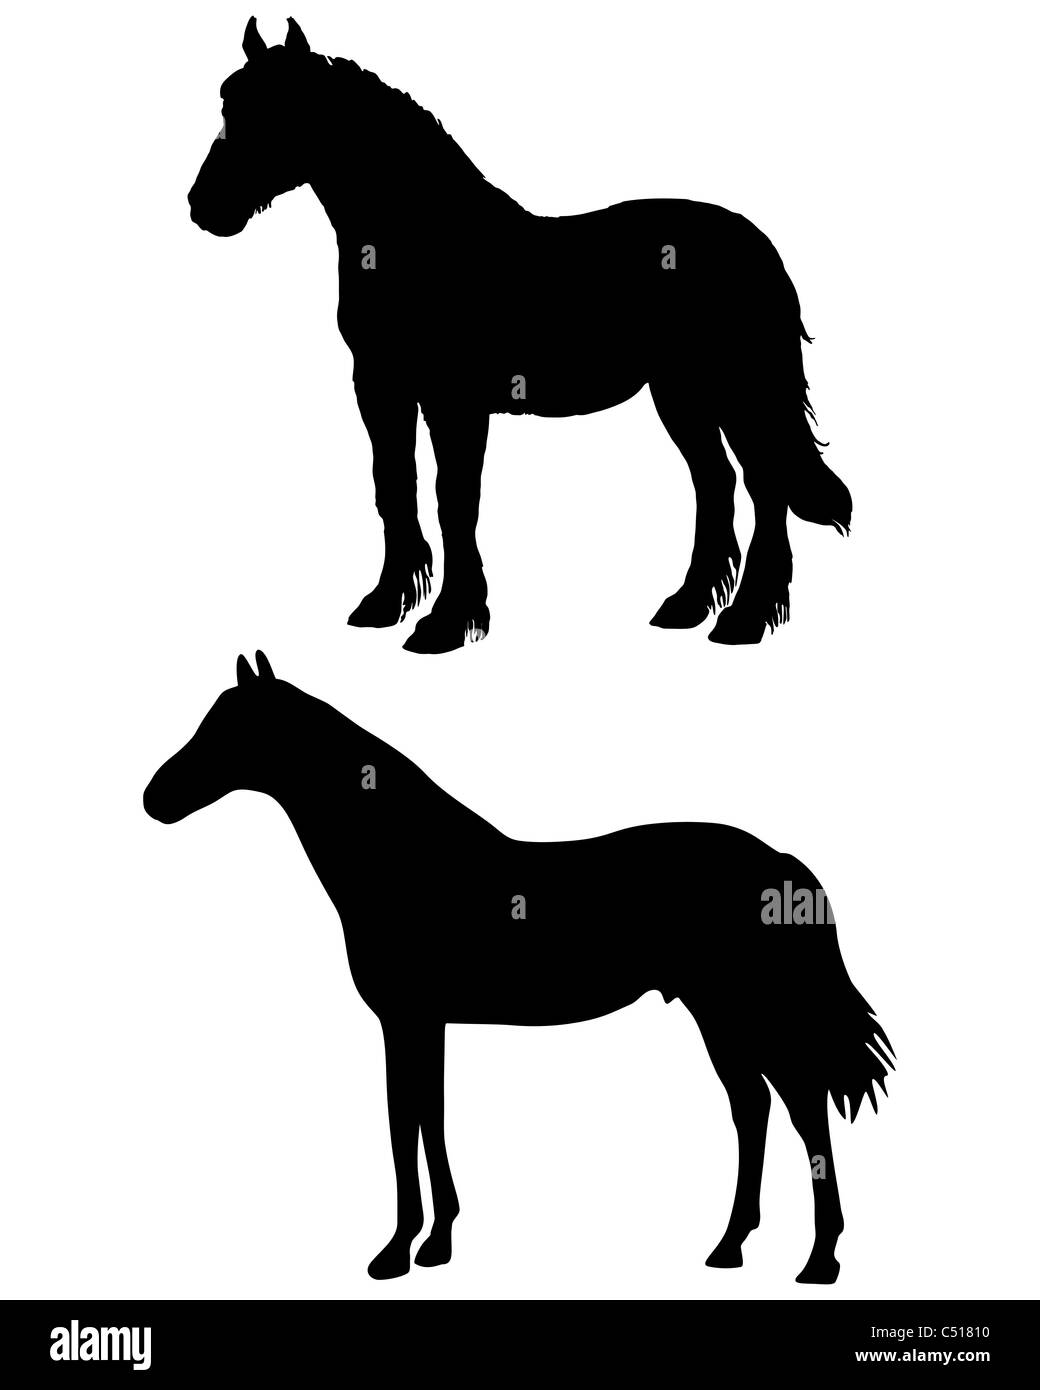 Horses silhouettes Stock Photo